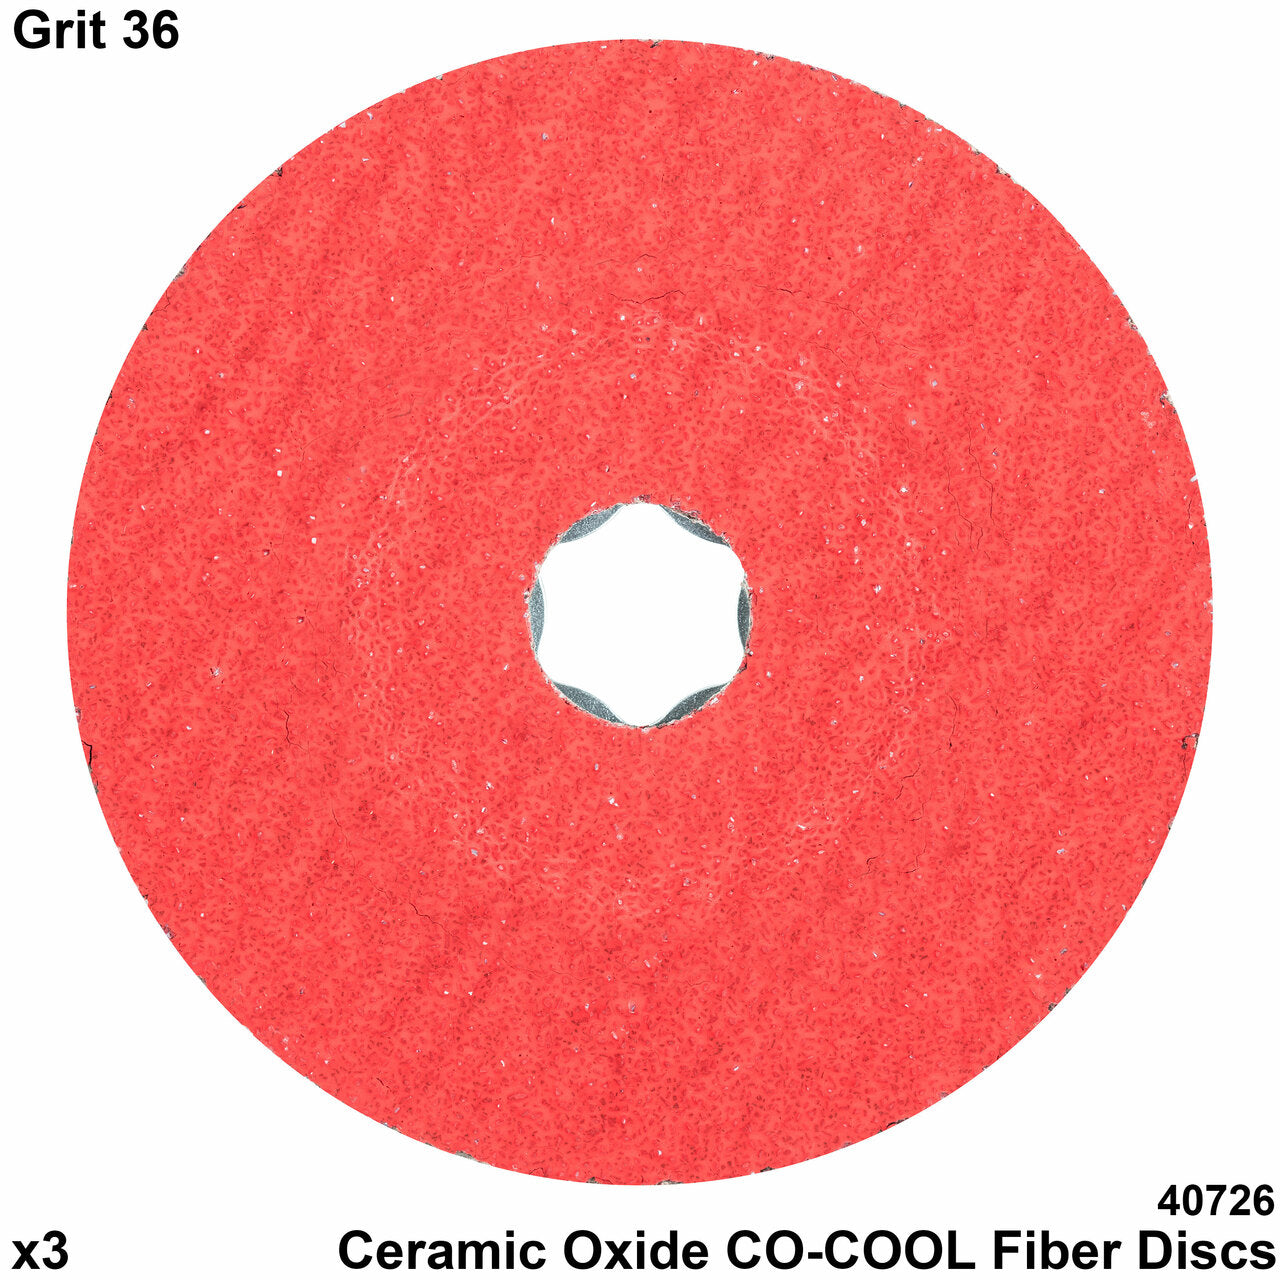 COMBICLICK® Fiber Disc, 4-1/2" Dia. - Ceramic Oxide CO-COOL, 36 Grit (25pc)